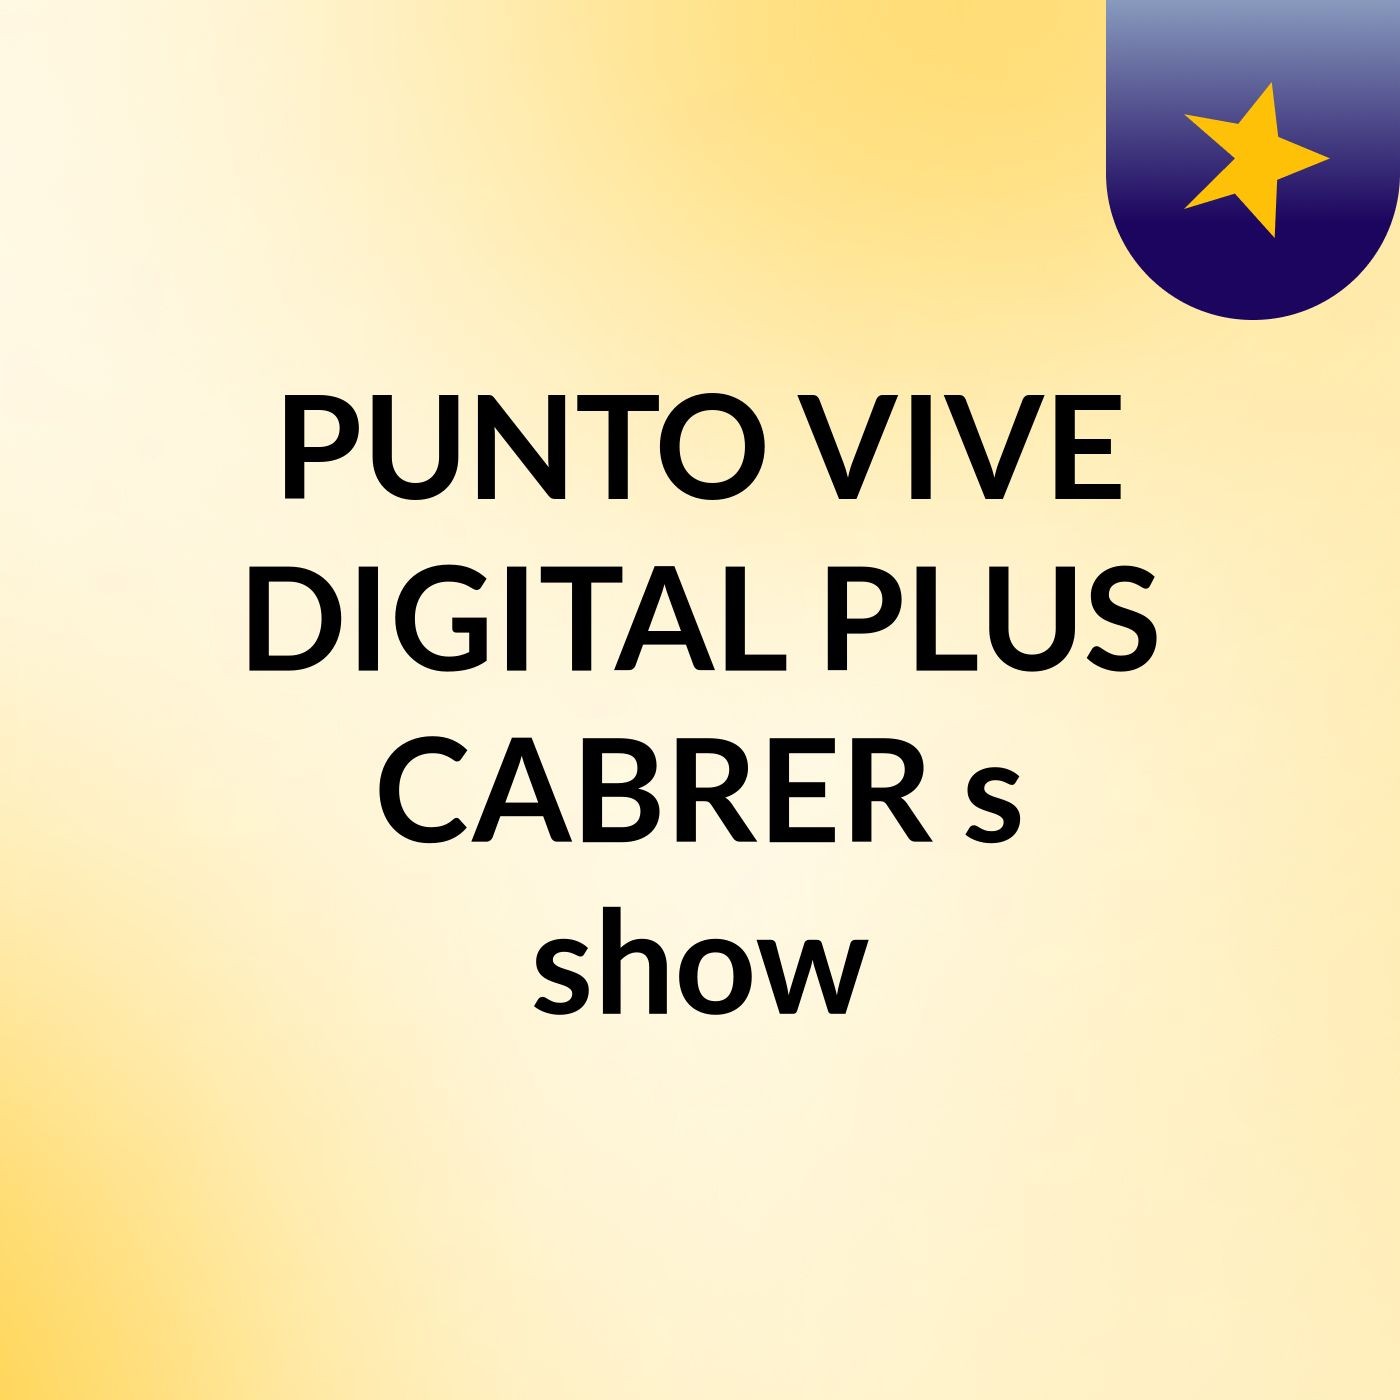 PUNTO VIVE DIGITAL PLUS CABRER's show